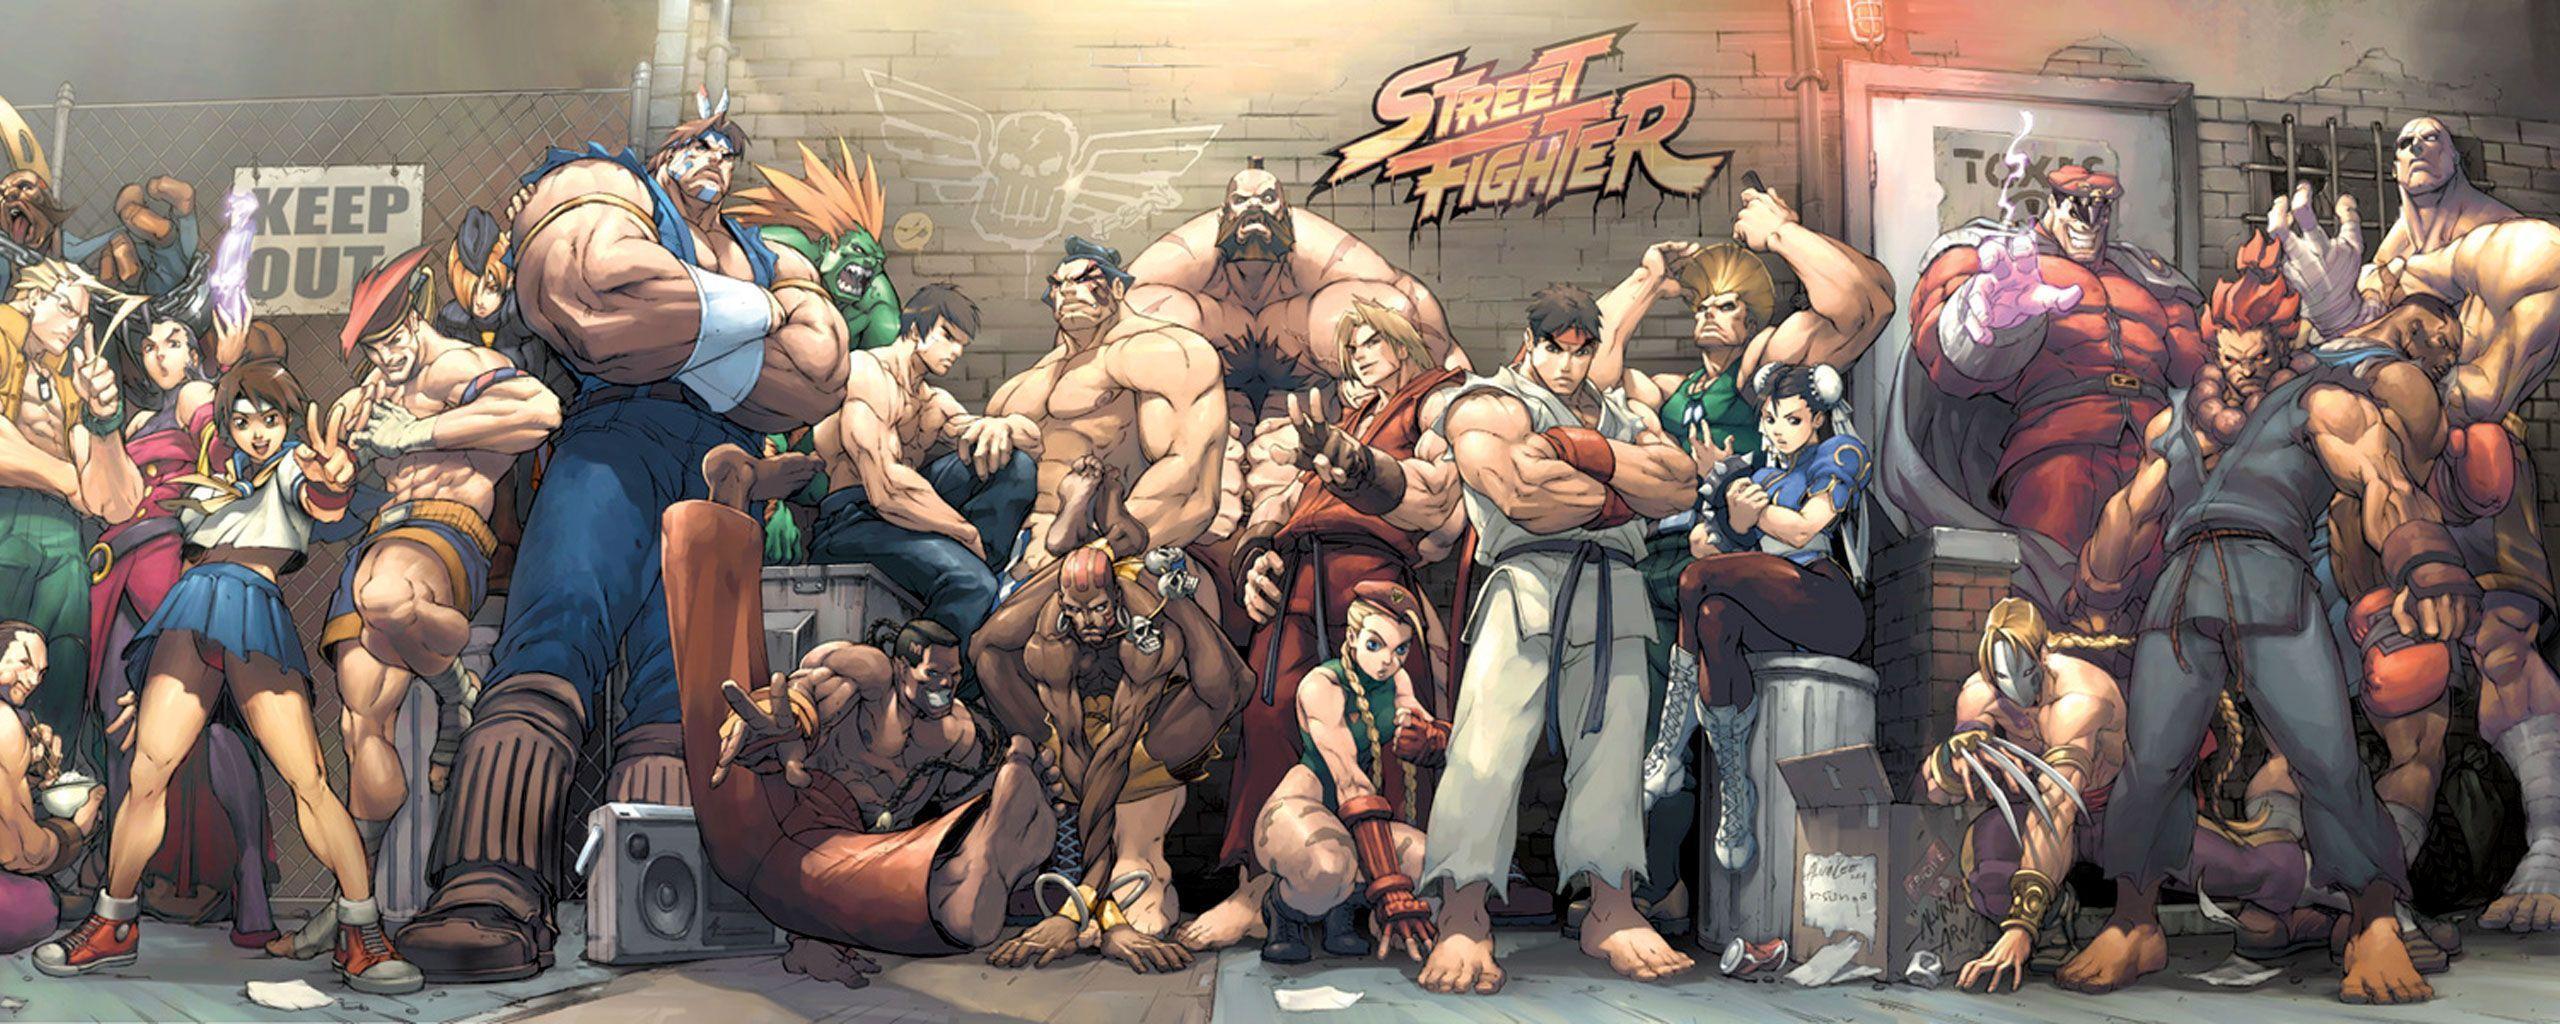 Street Fighter 6 Wallpaper